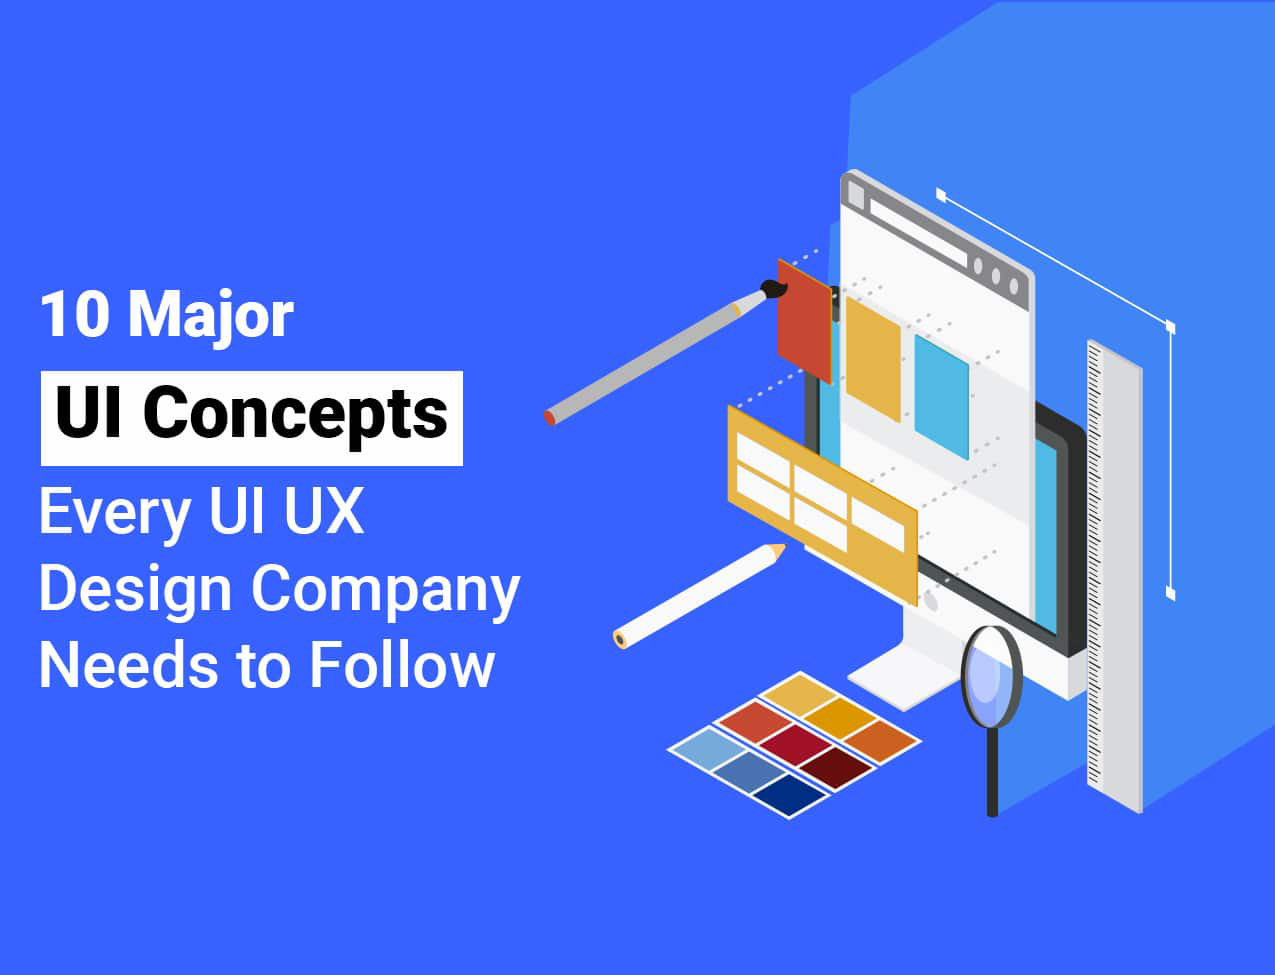 10 Major UI Concepts Every UI UX Design Company Needs to Follow